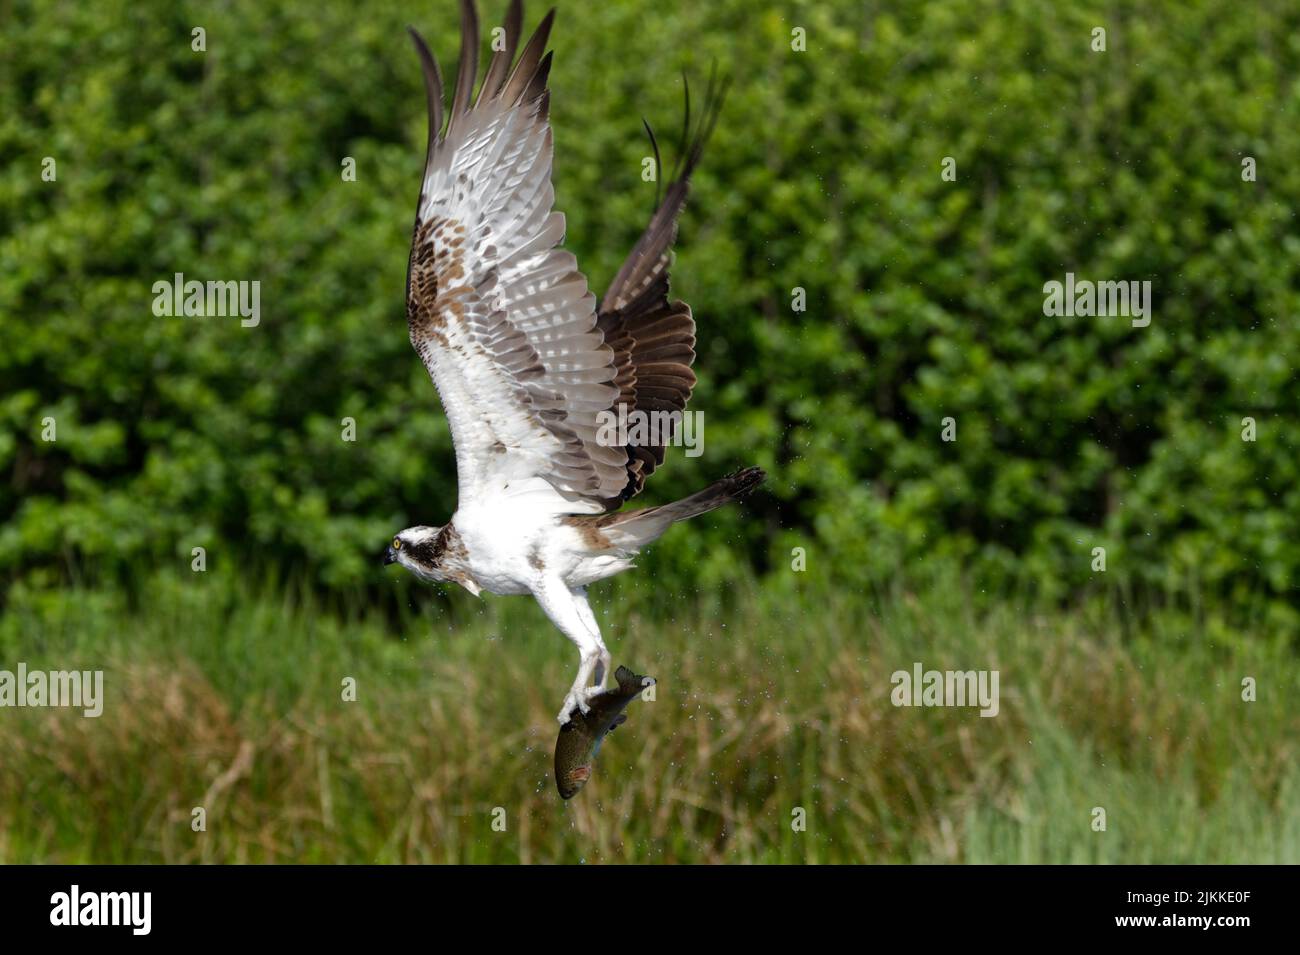 An Osprey flying in a field Stock Photo